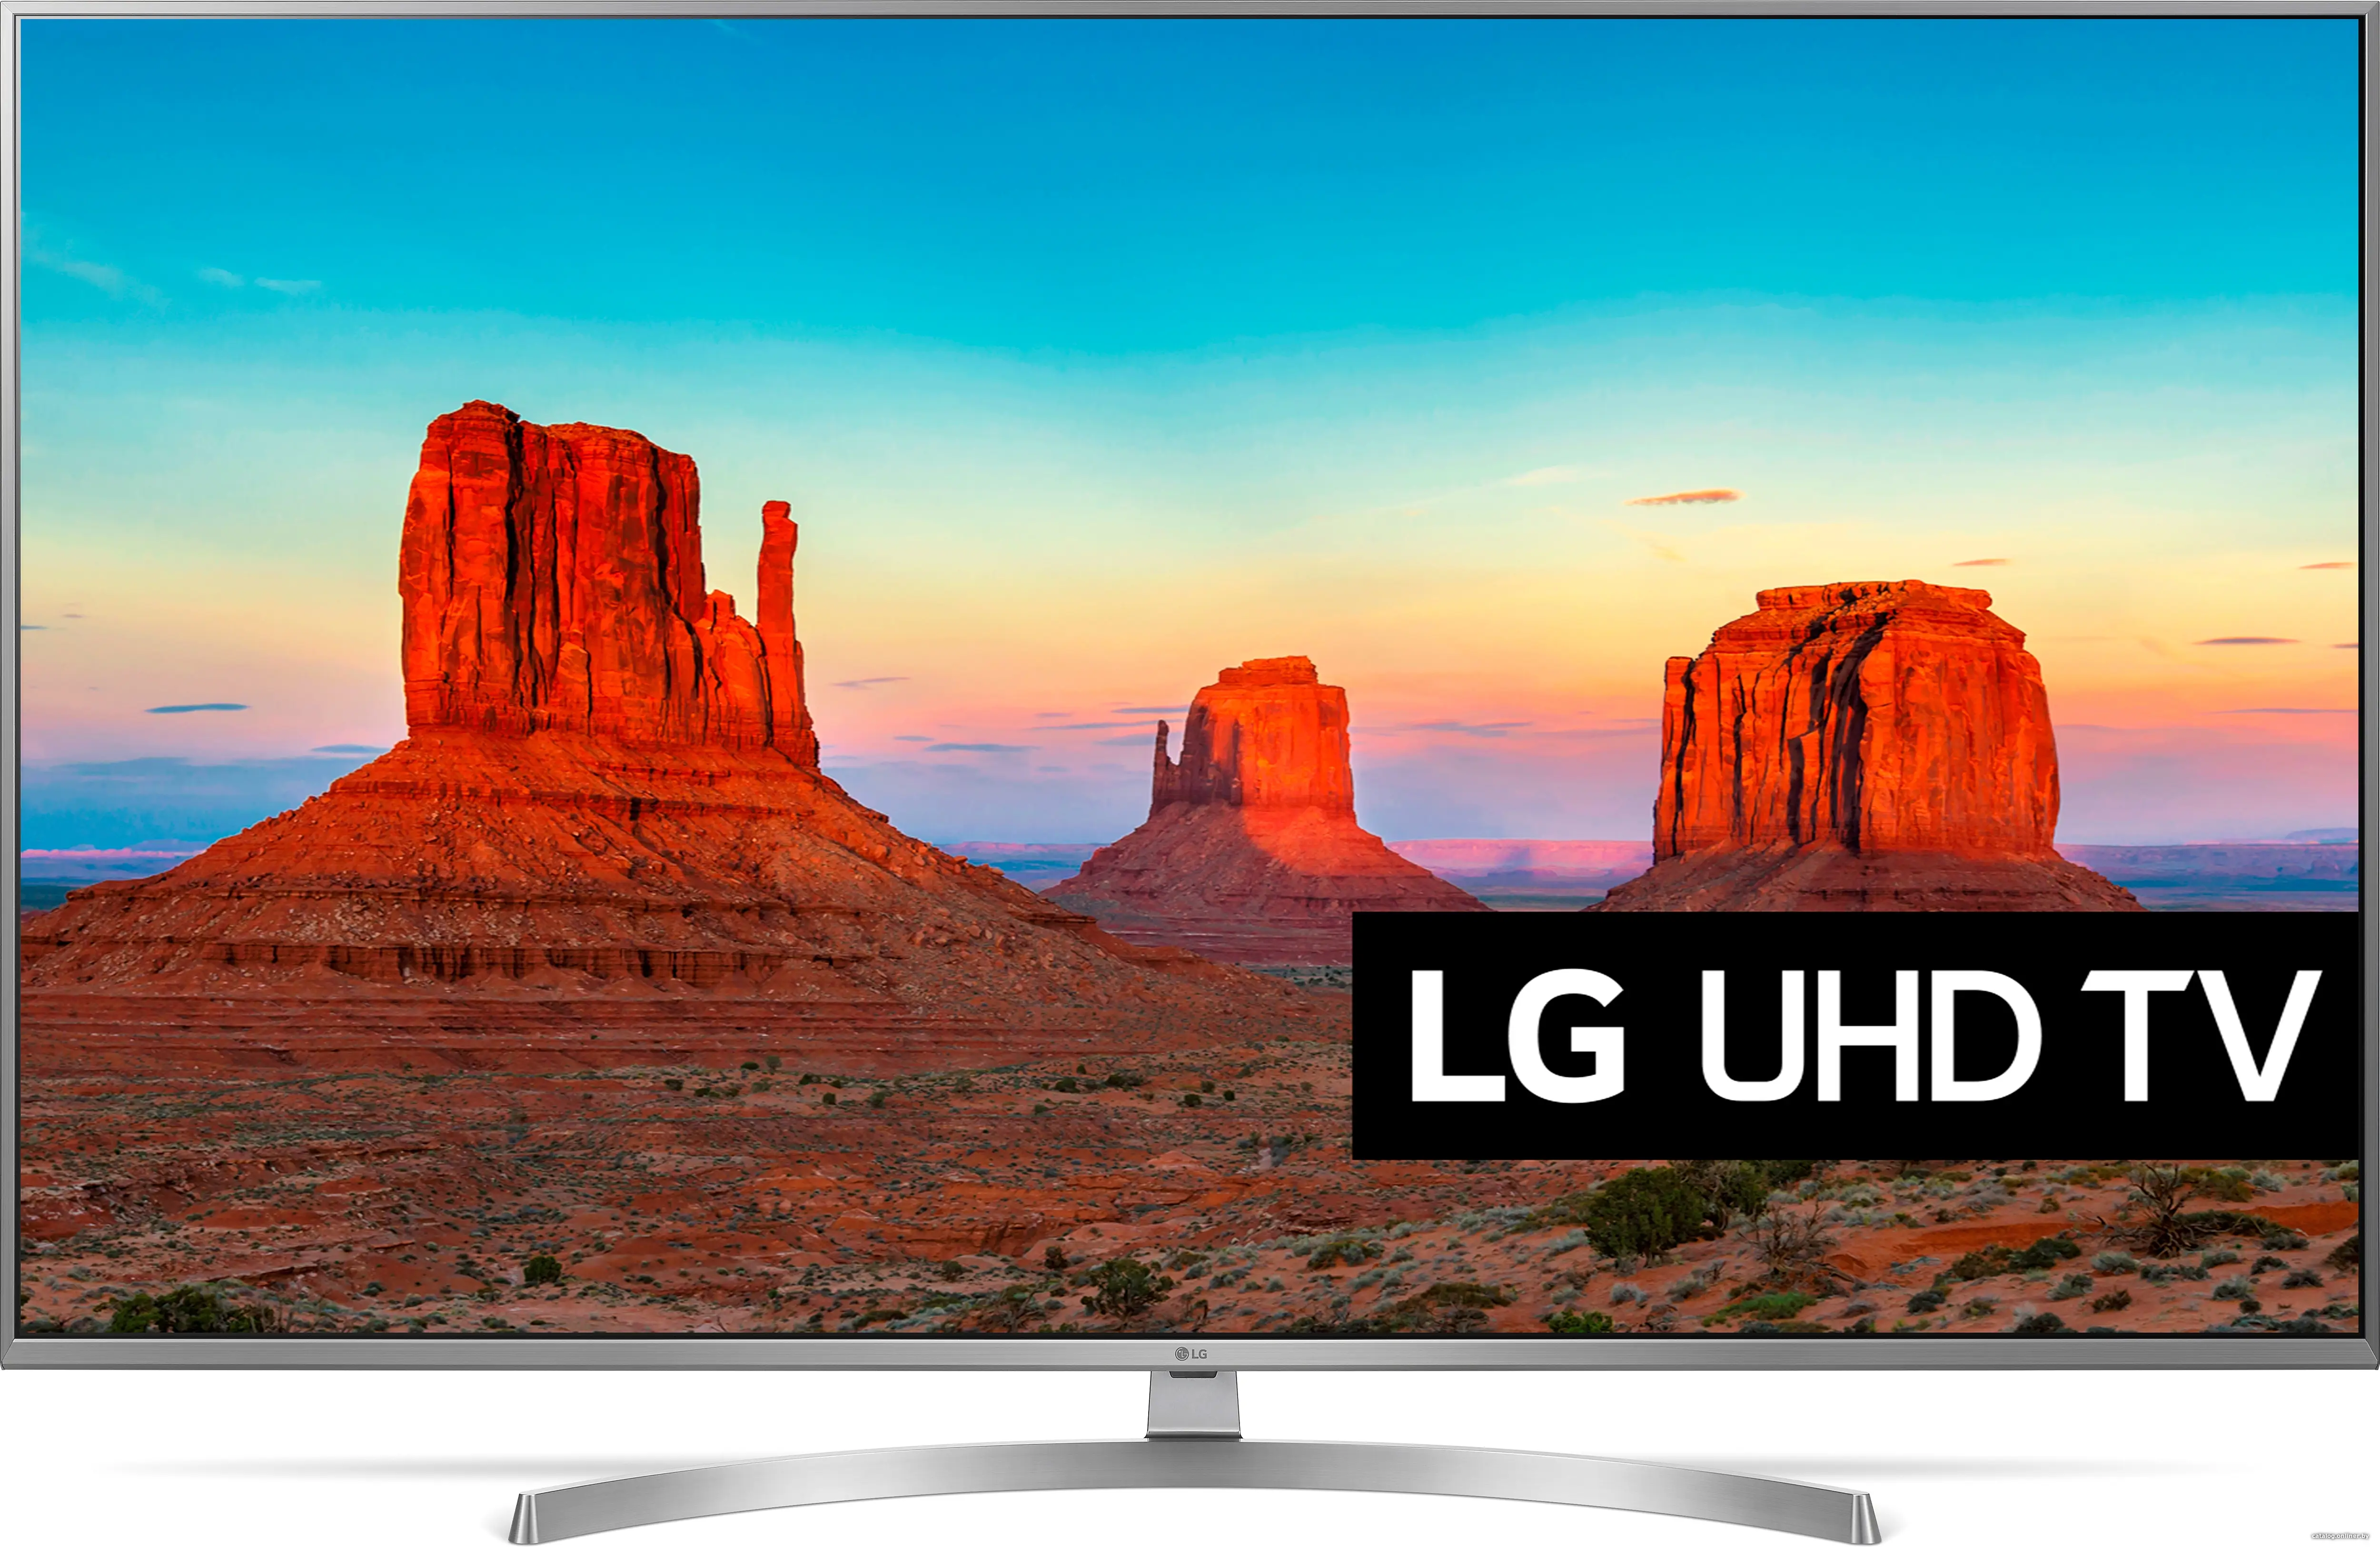 Купить Телевизор LG 55UK7550, цена, опт и розница